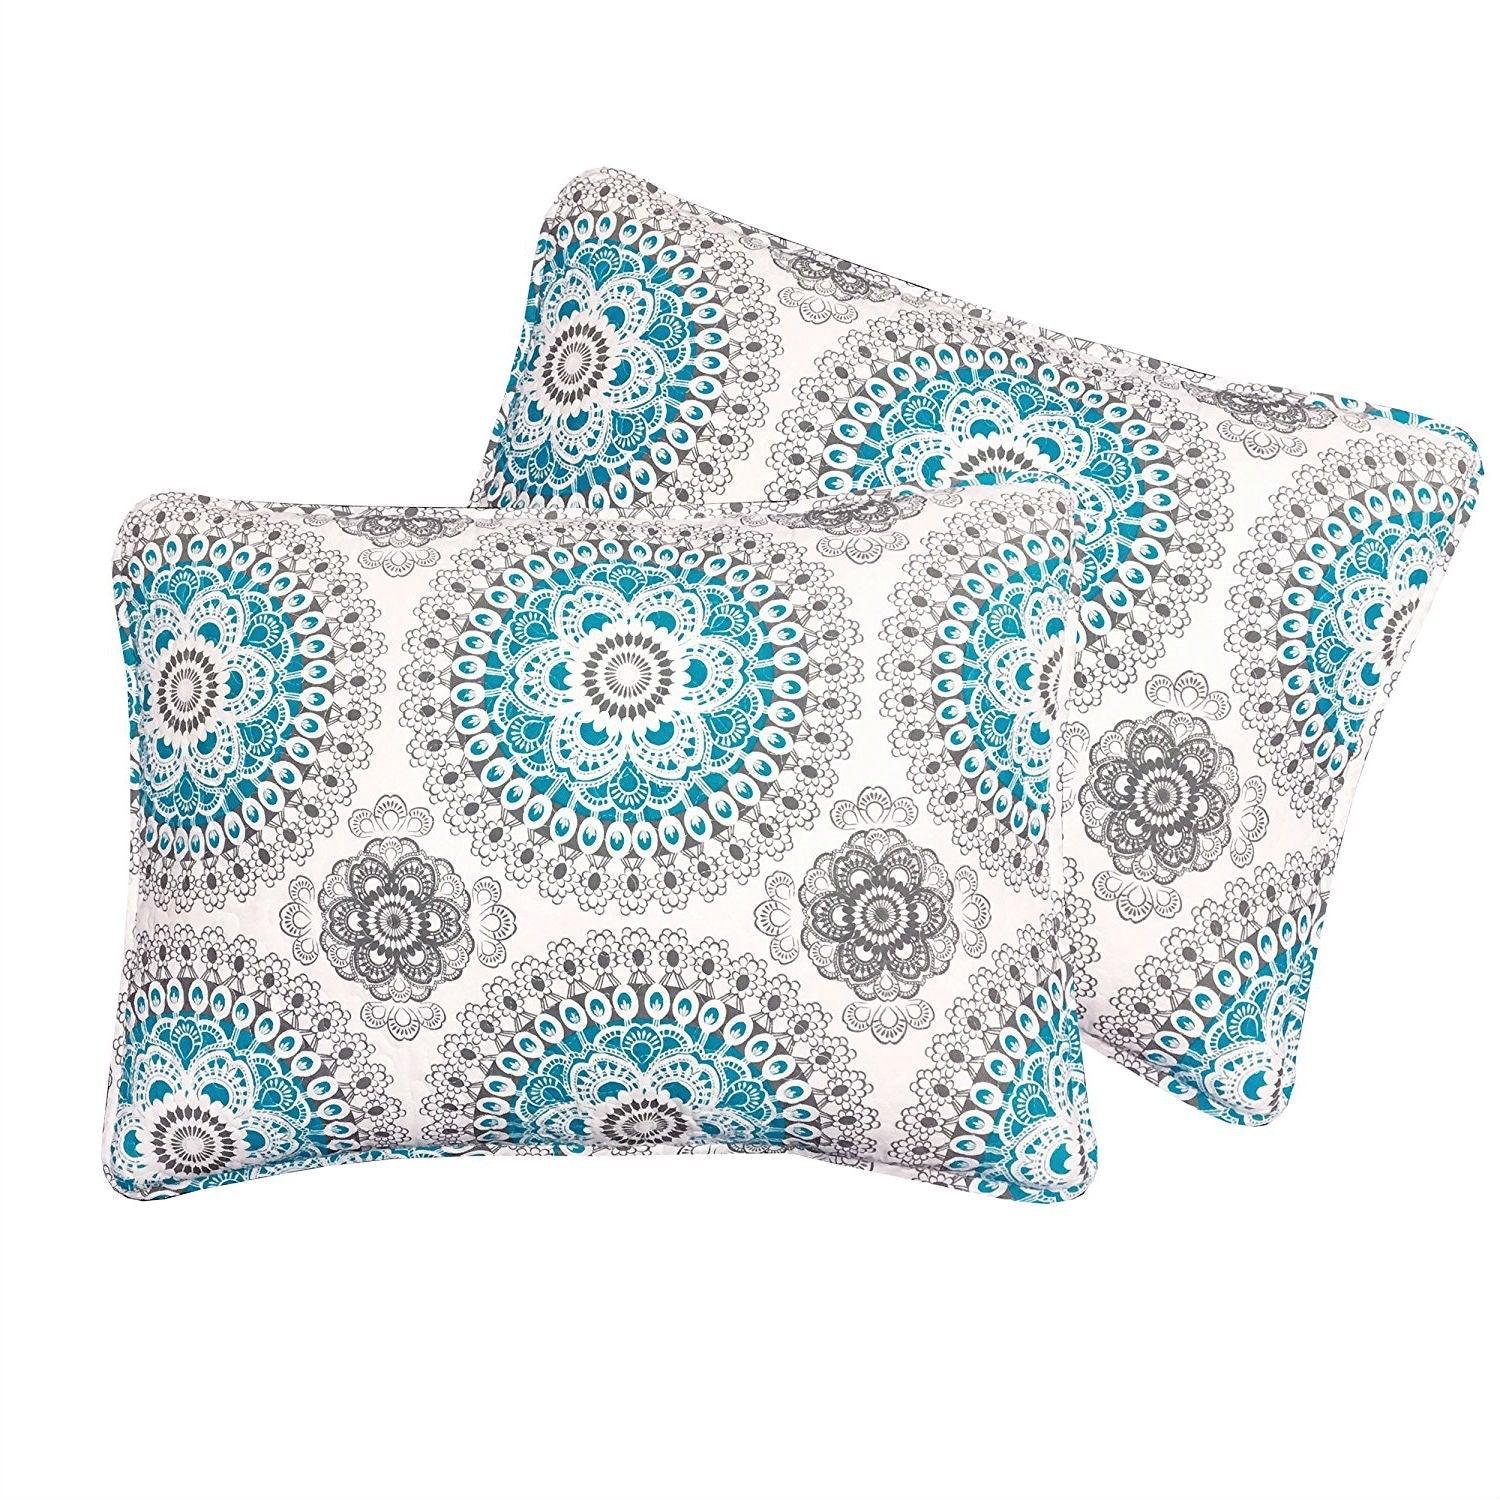 King size 3-Piece Cotton Quit Set in Aqua Blue White and Grey Floral Pattern - beddingbag.com